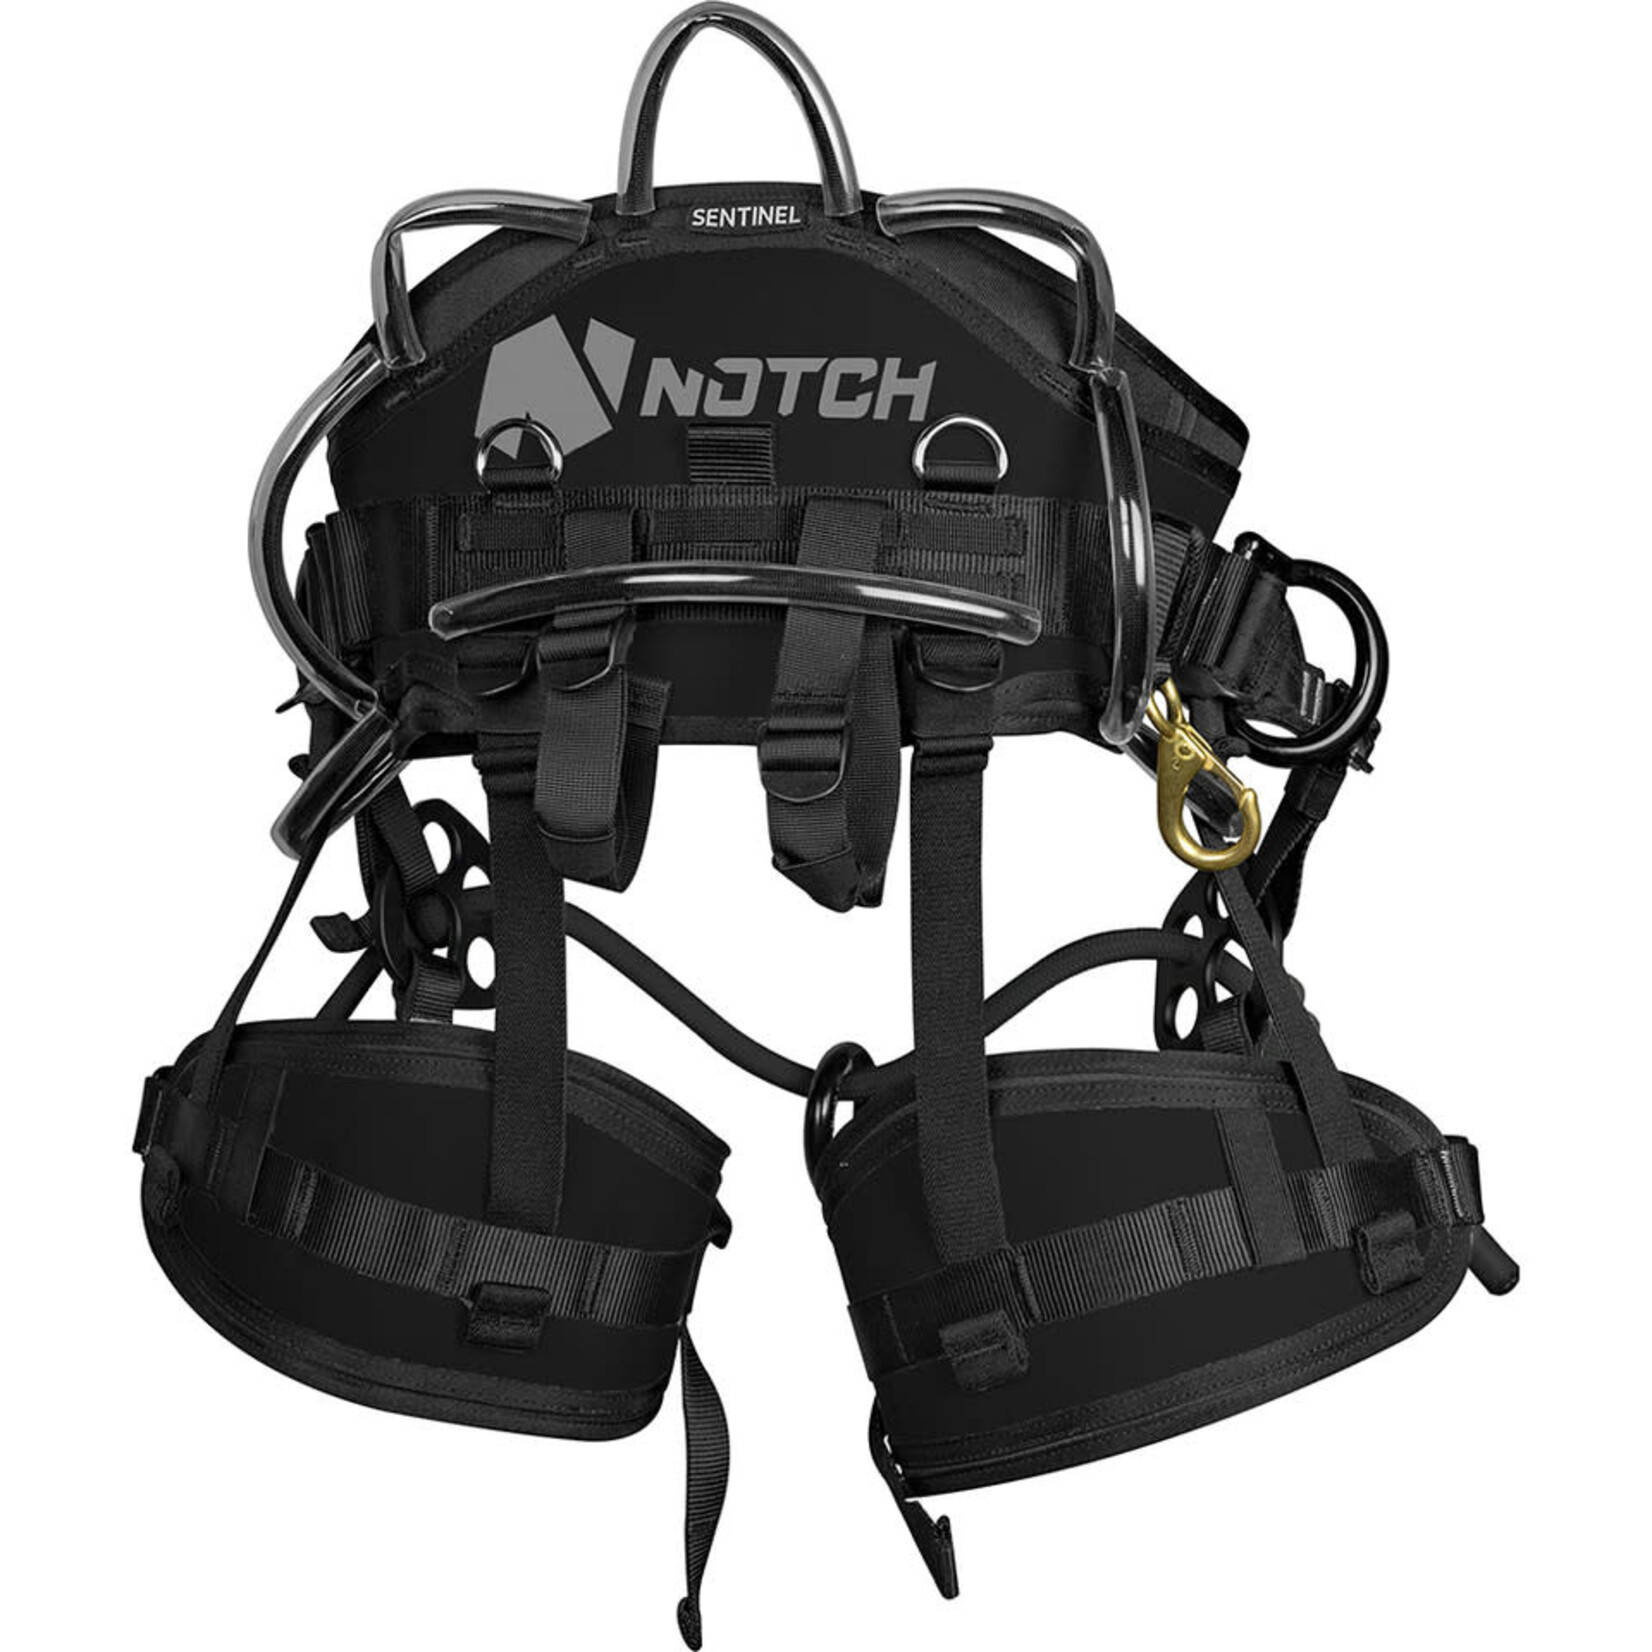 Notch Sentinel Saddle